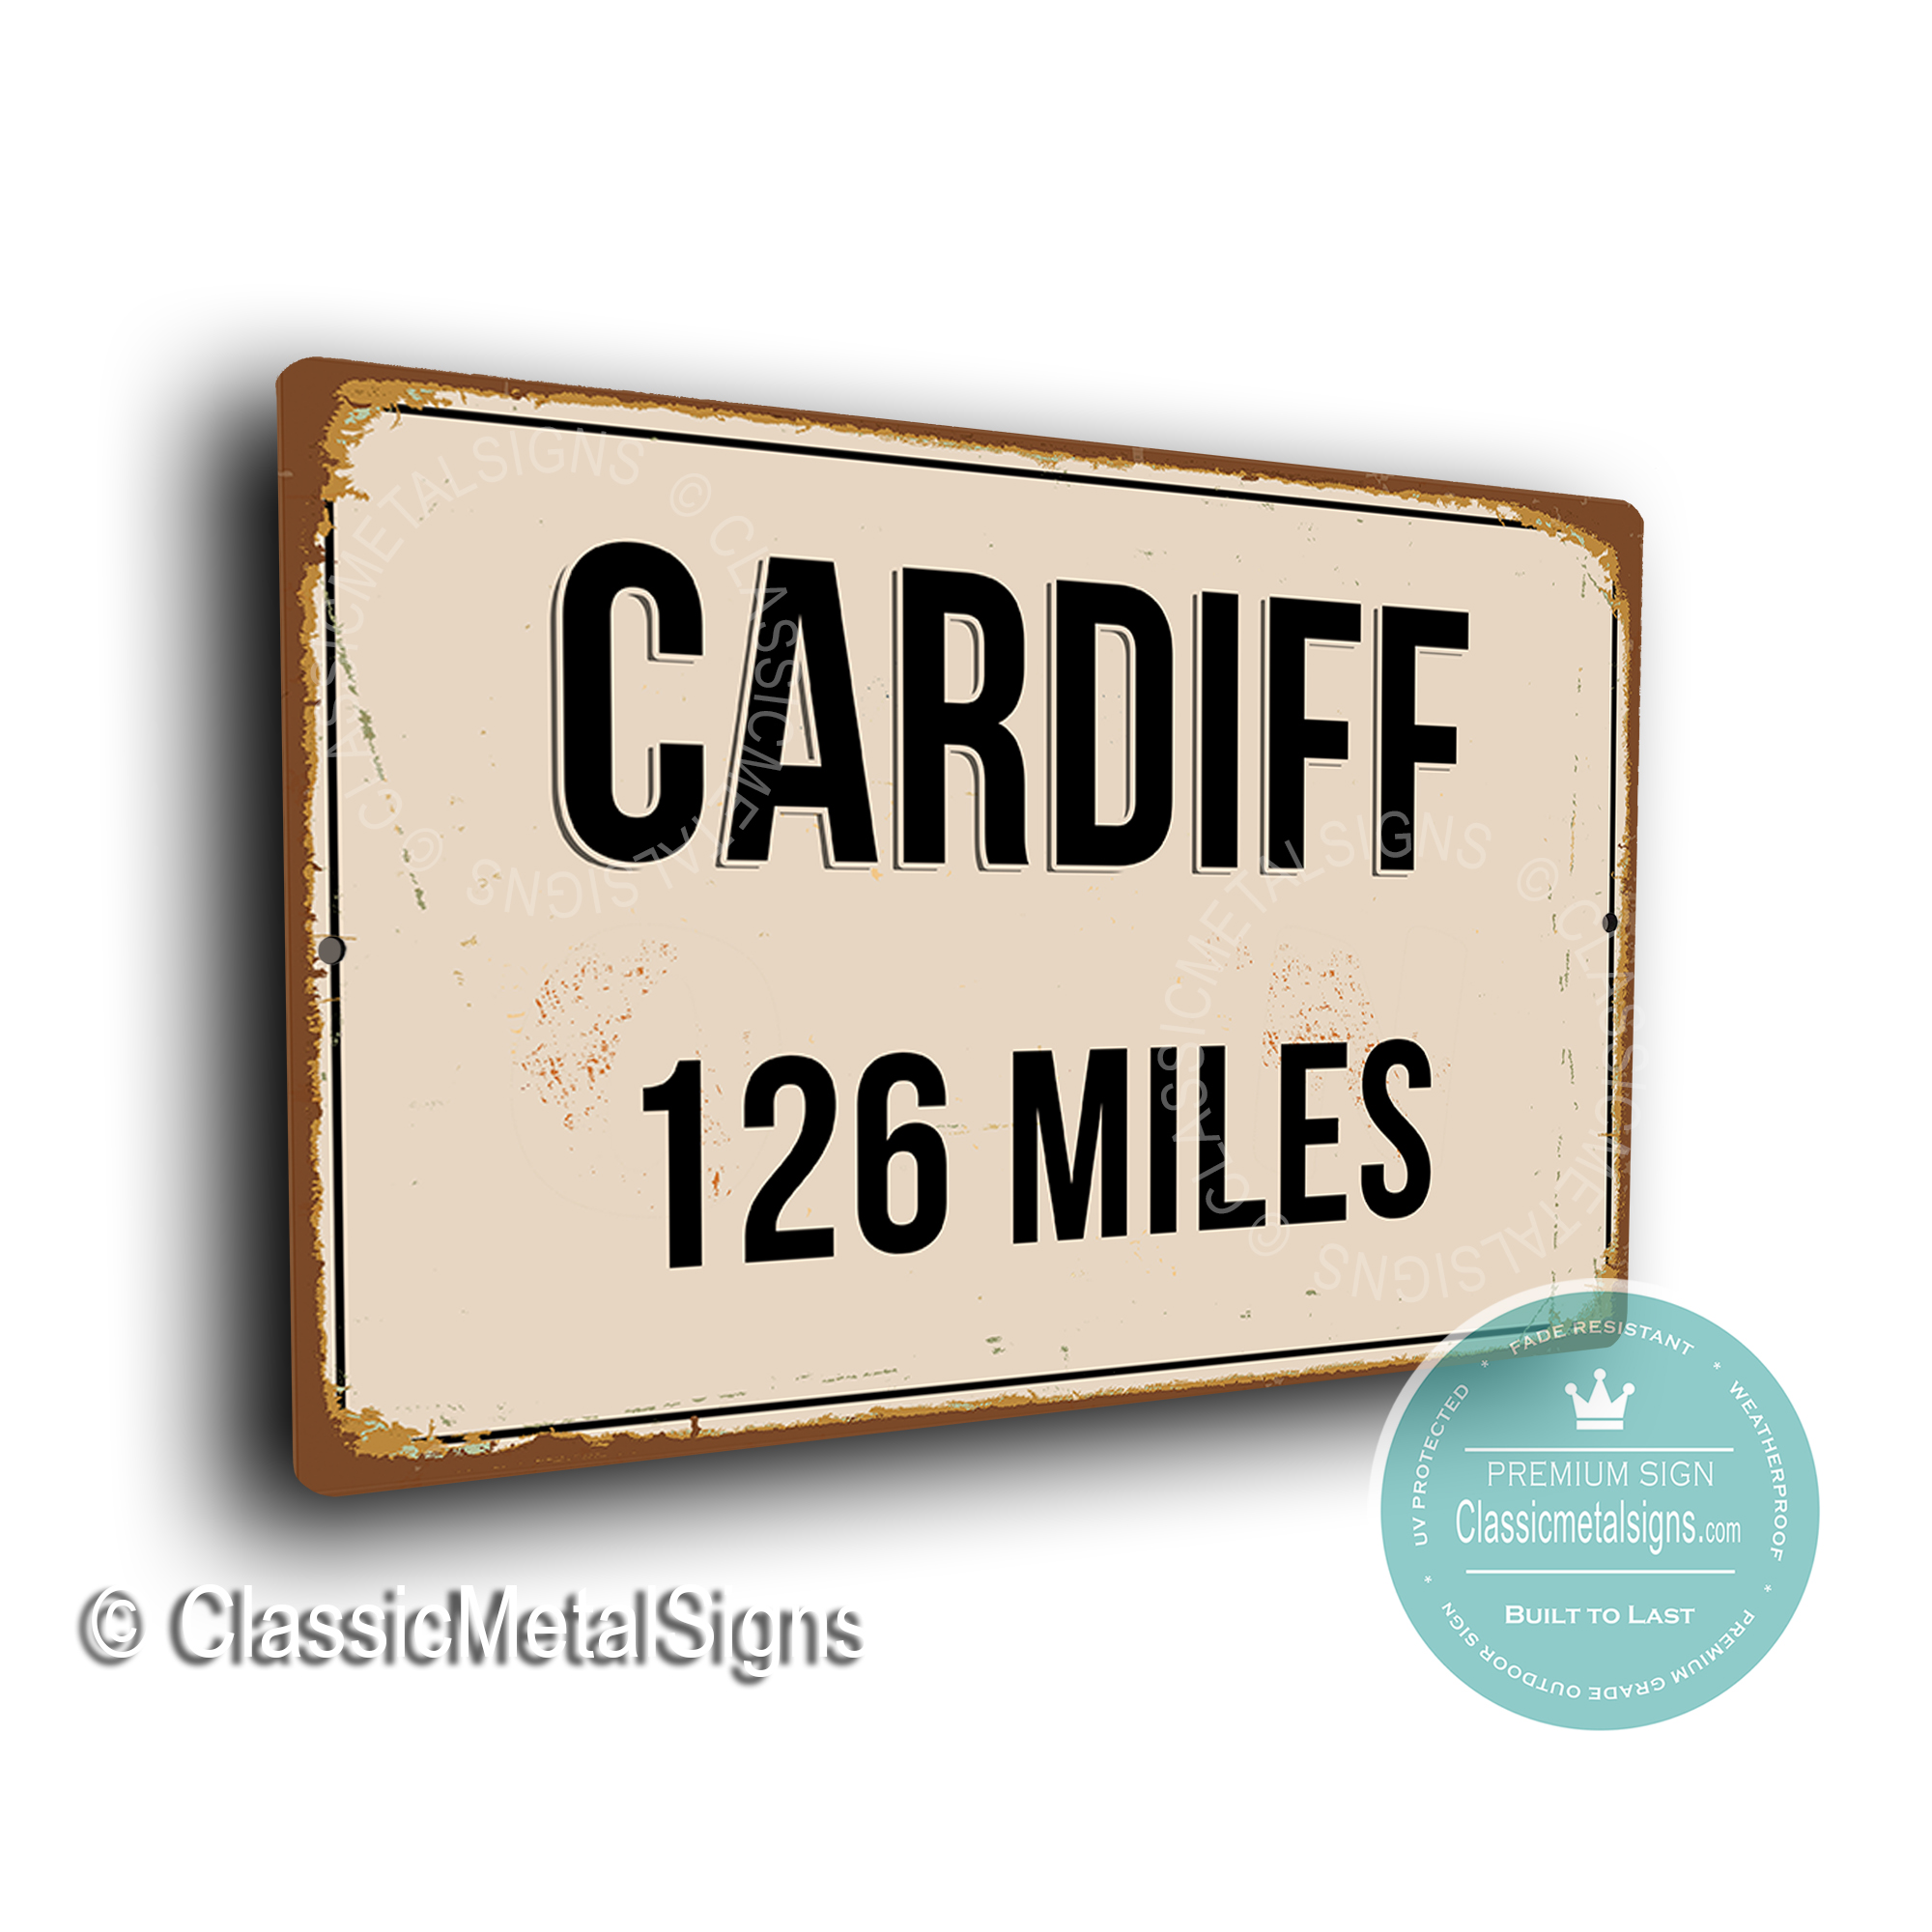 Cardiff Street Sign